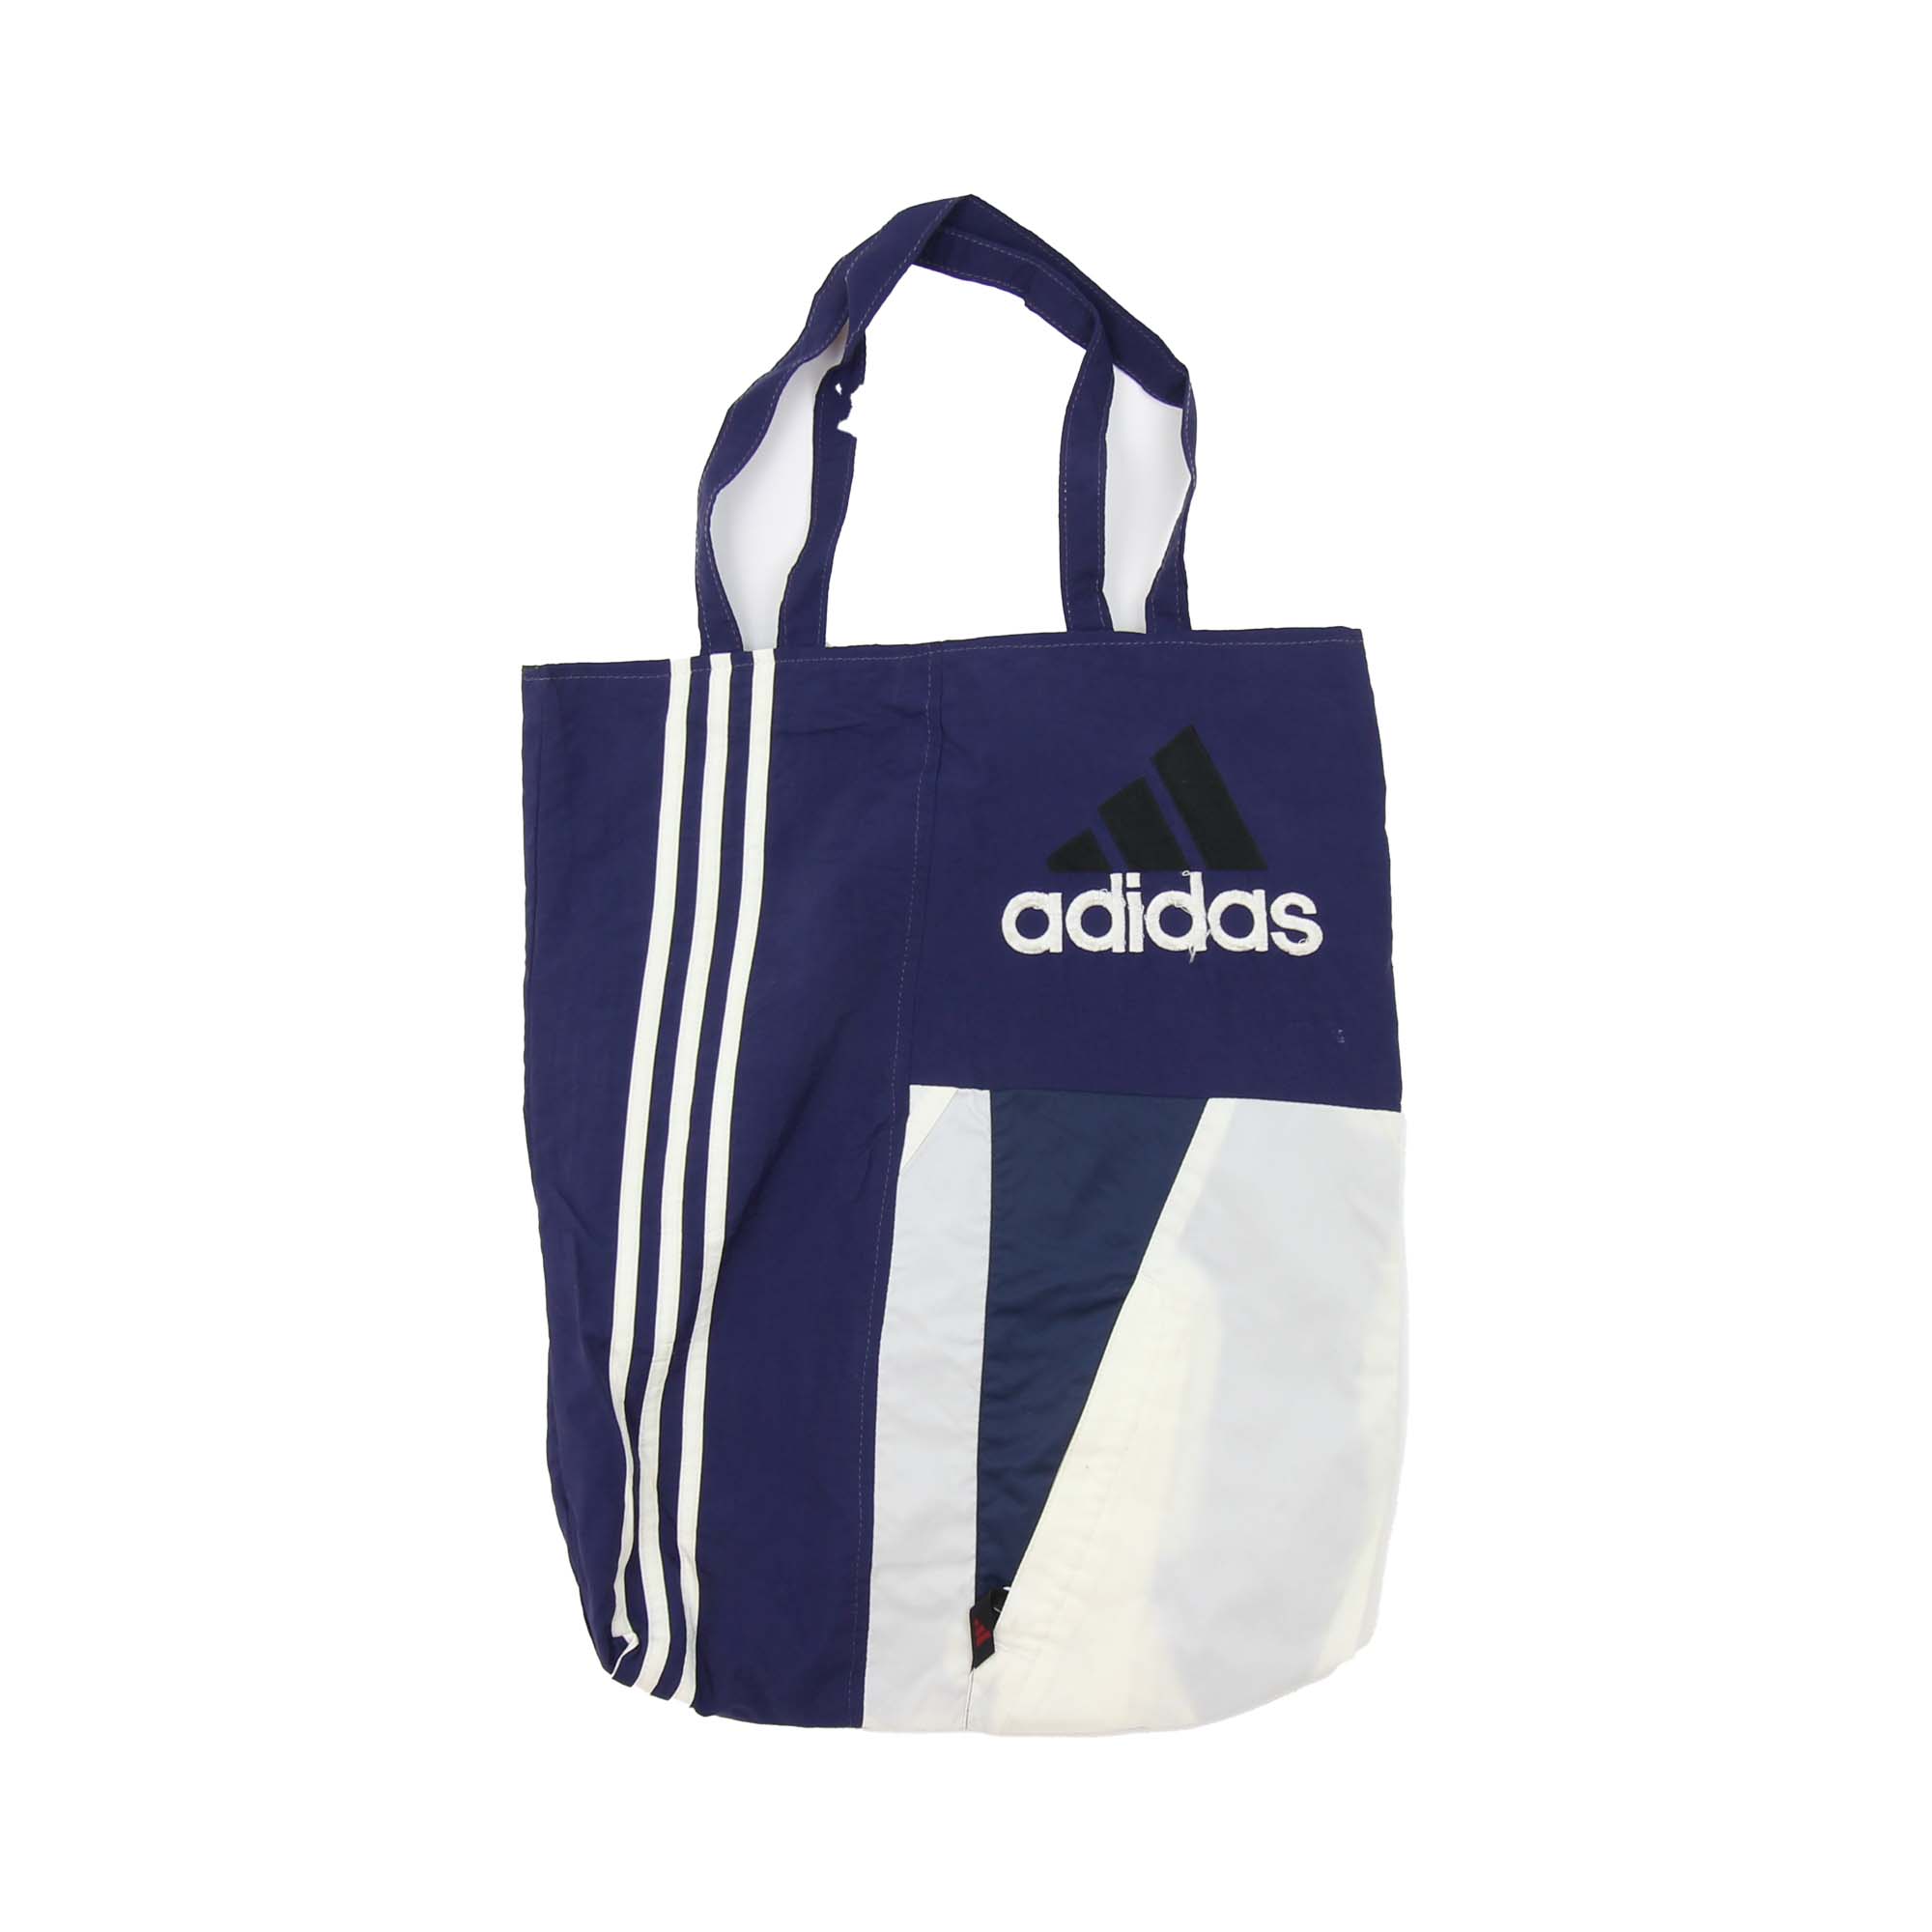 Adidas Rework Bag 